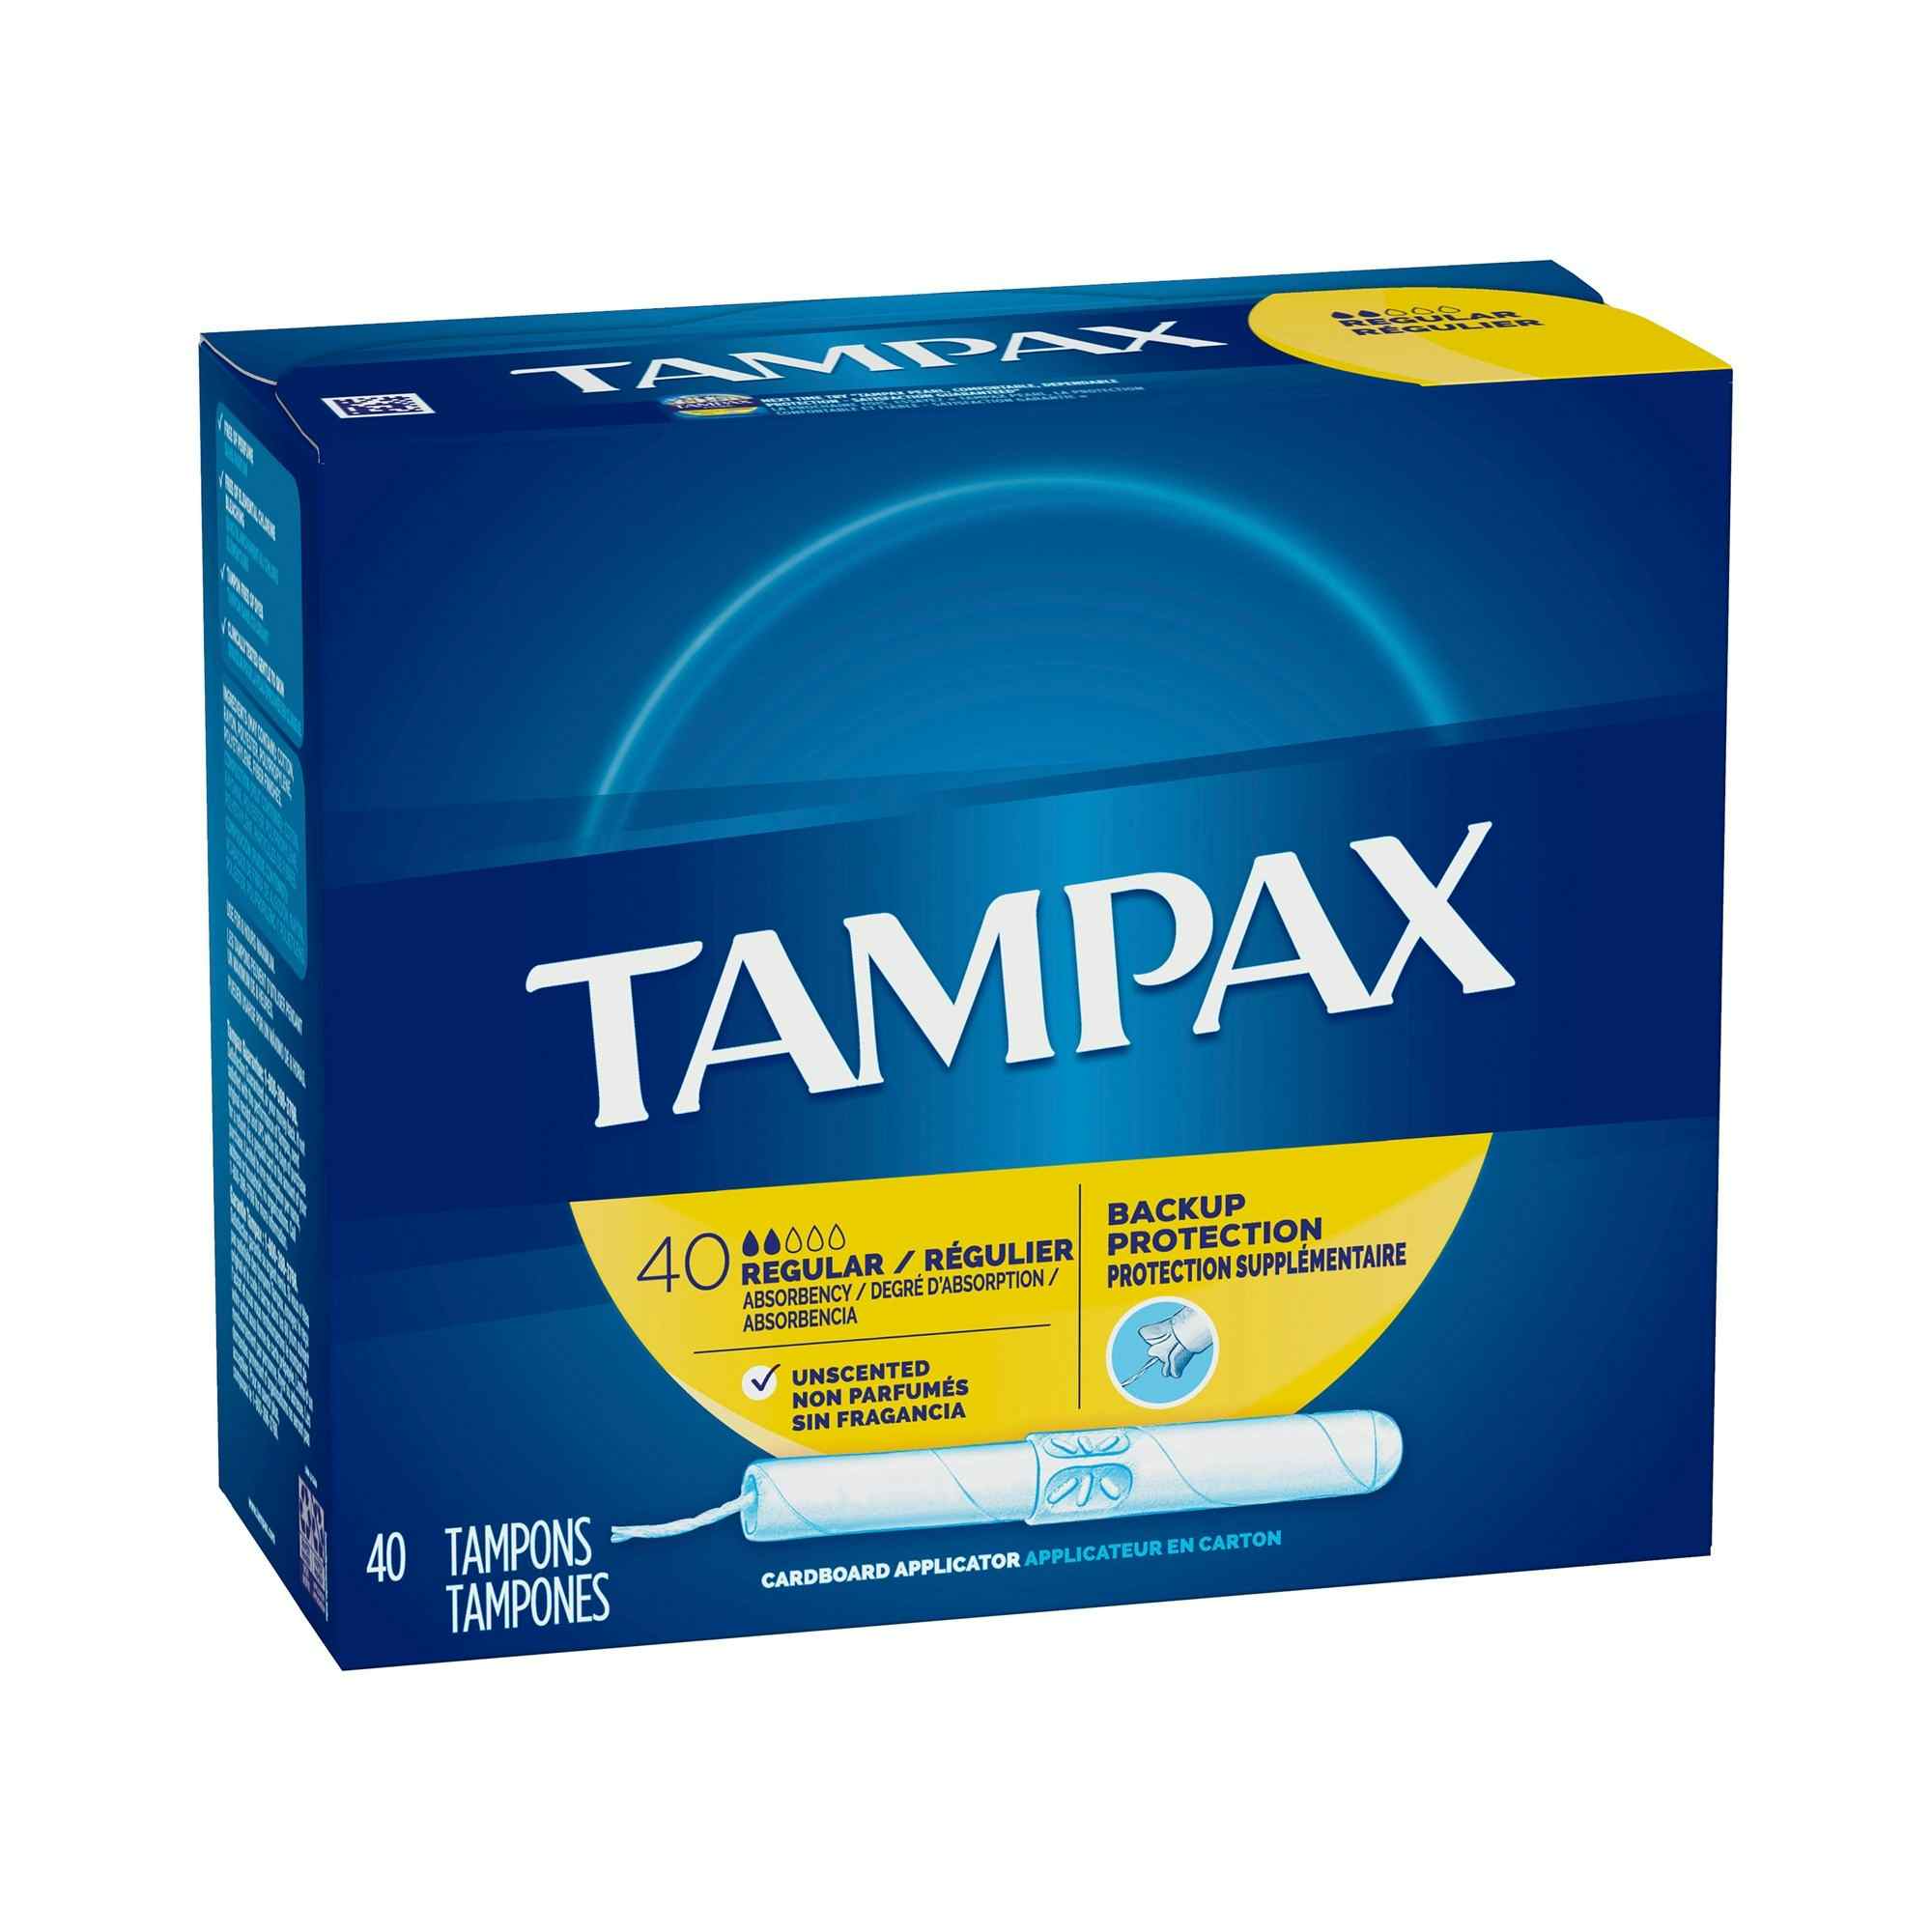 Tampax Regular Absorbency Tampons, Cardboard Applicator, 07301022110, Box of 40 